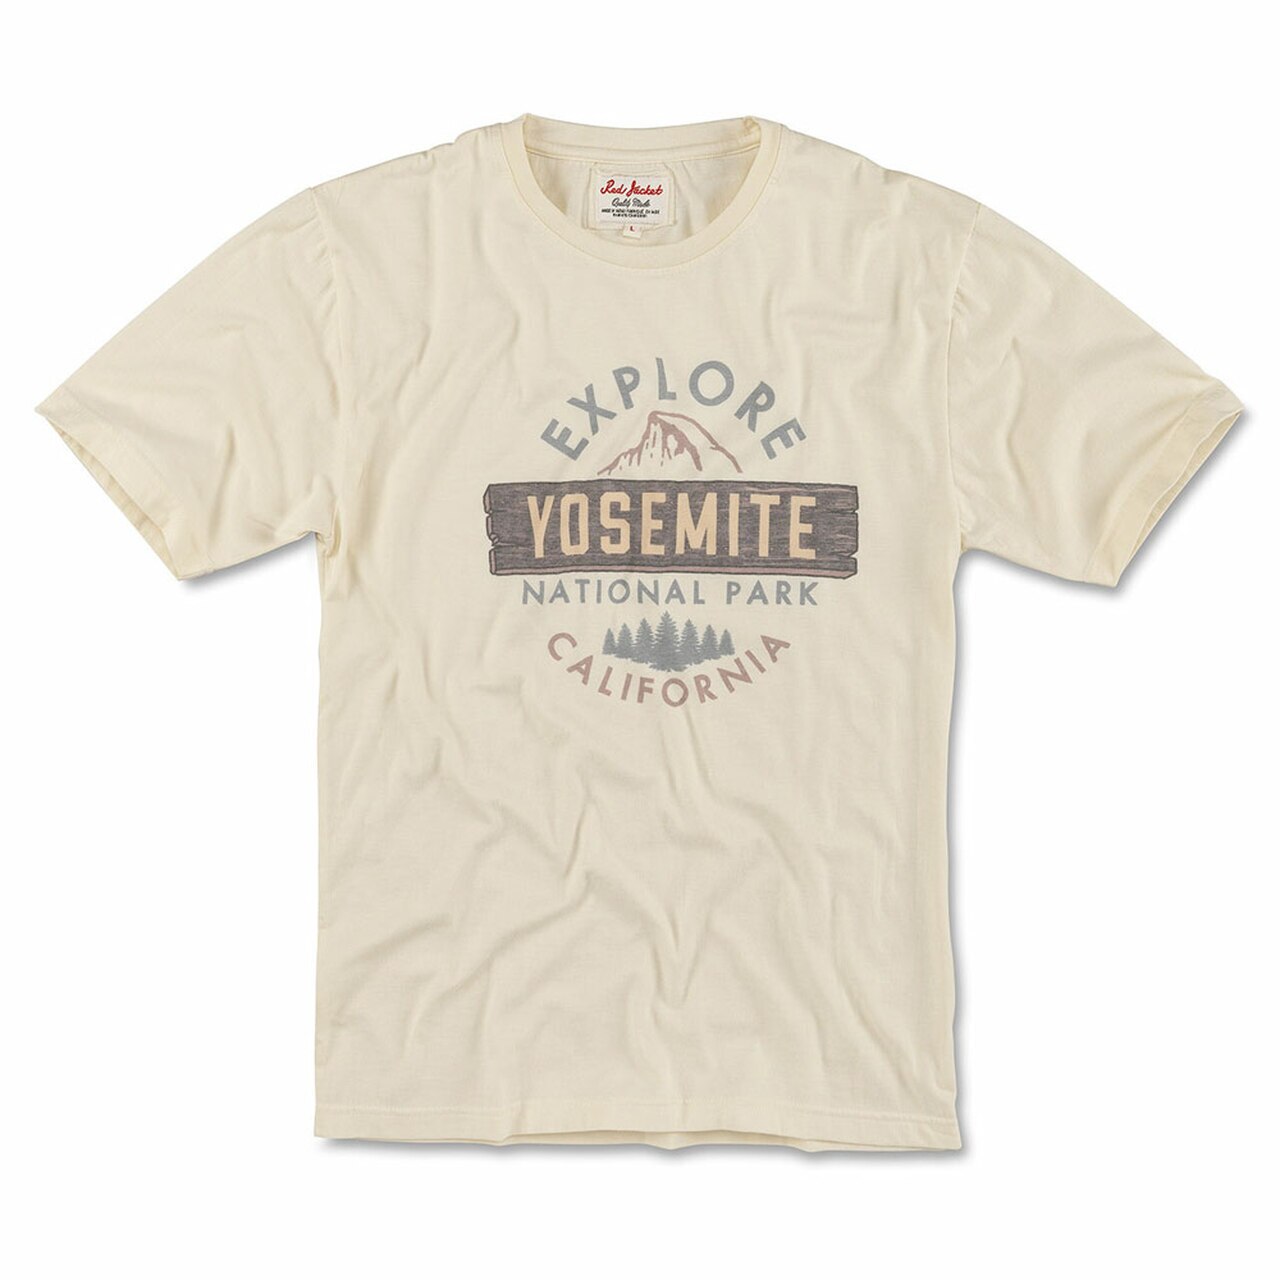 Vintage Fade Crew - Yosemite National Park